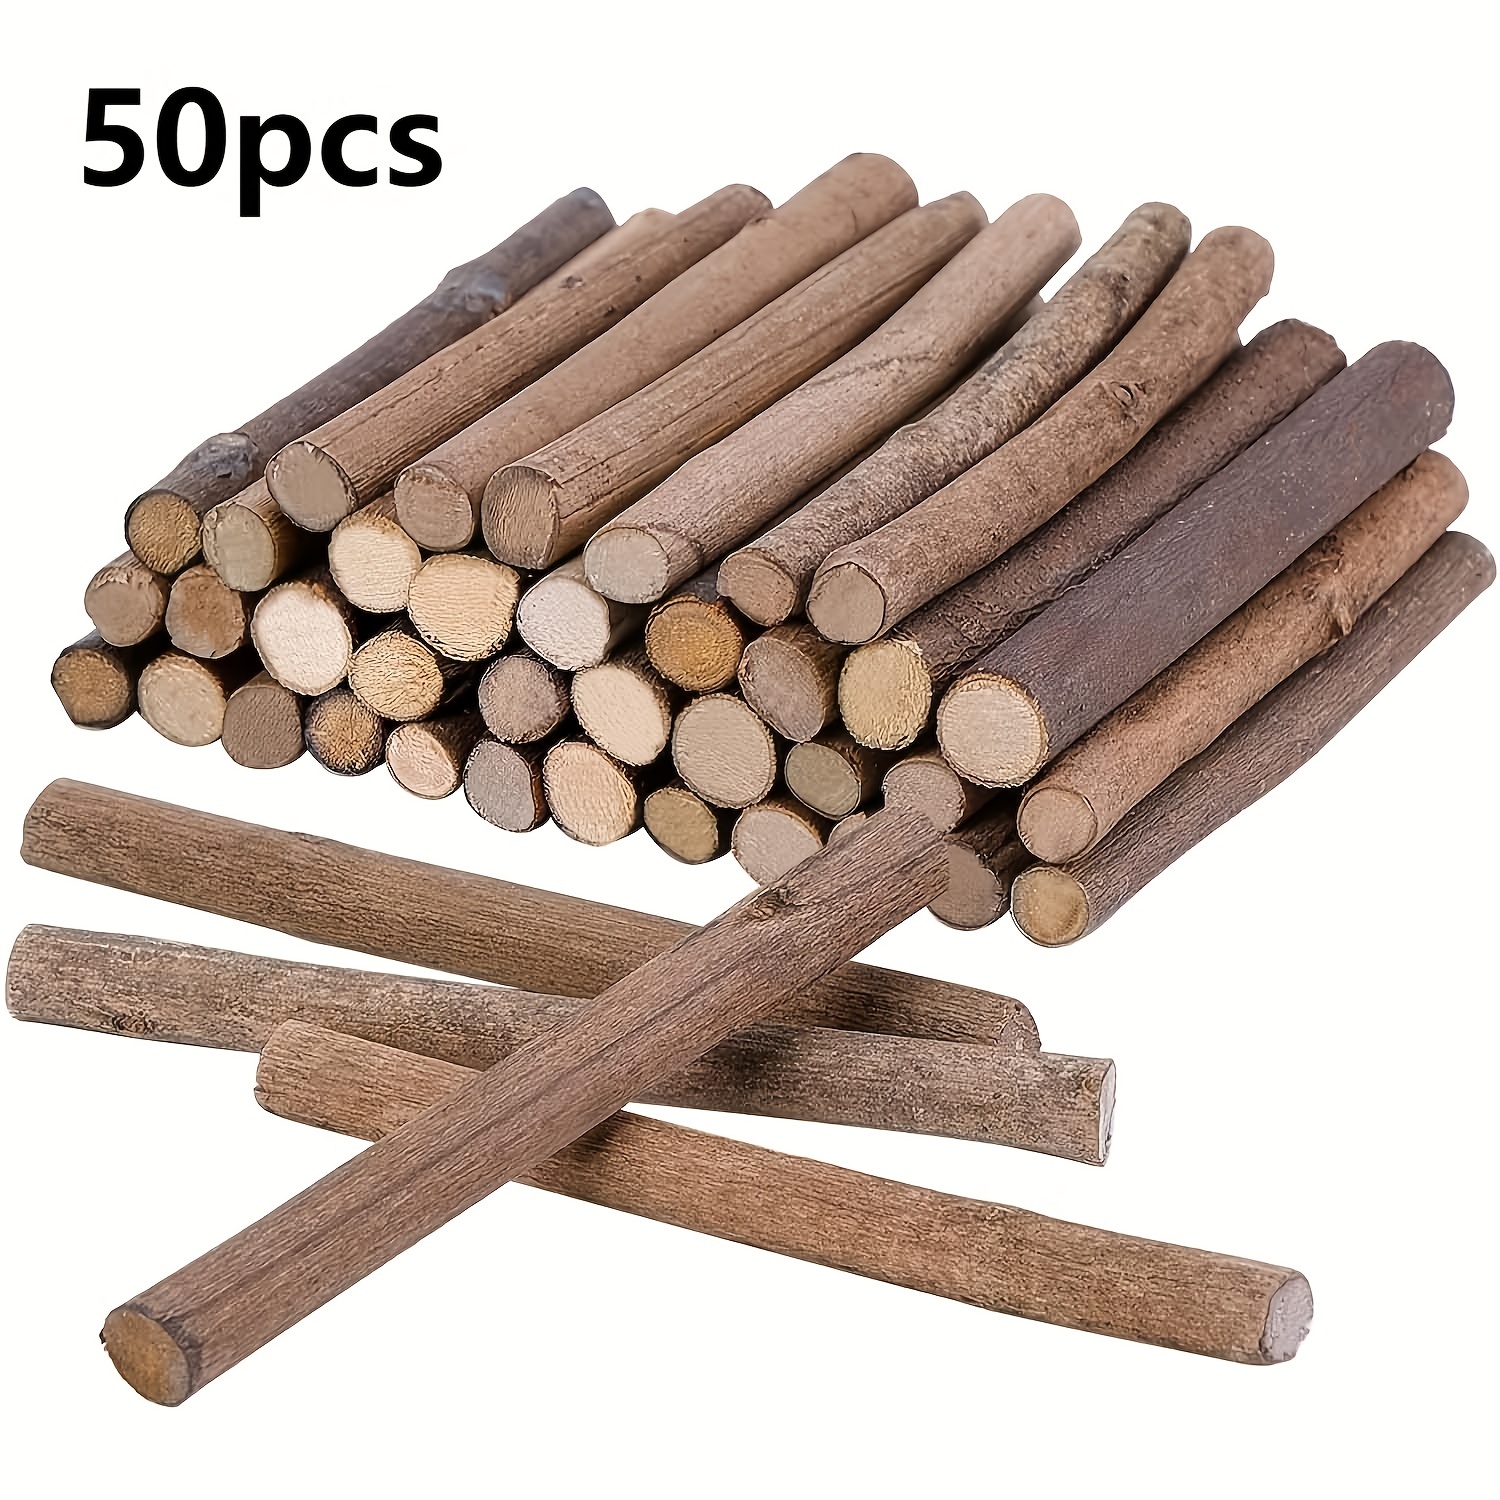 30pcs Balsa Wood Sticks Craft Square Wood Strips Wooden Dowel Sticks 12  Inch Hardwood Craft Sticks 1/4 Inch Thin Wood Strips For Models Making DIY